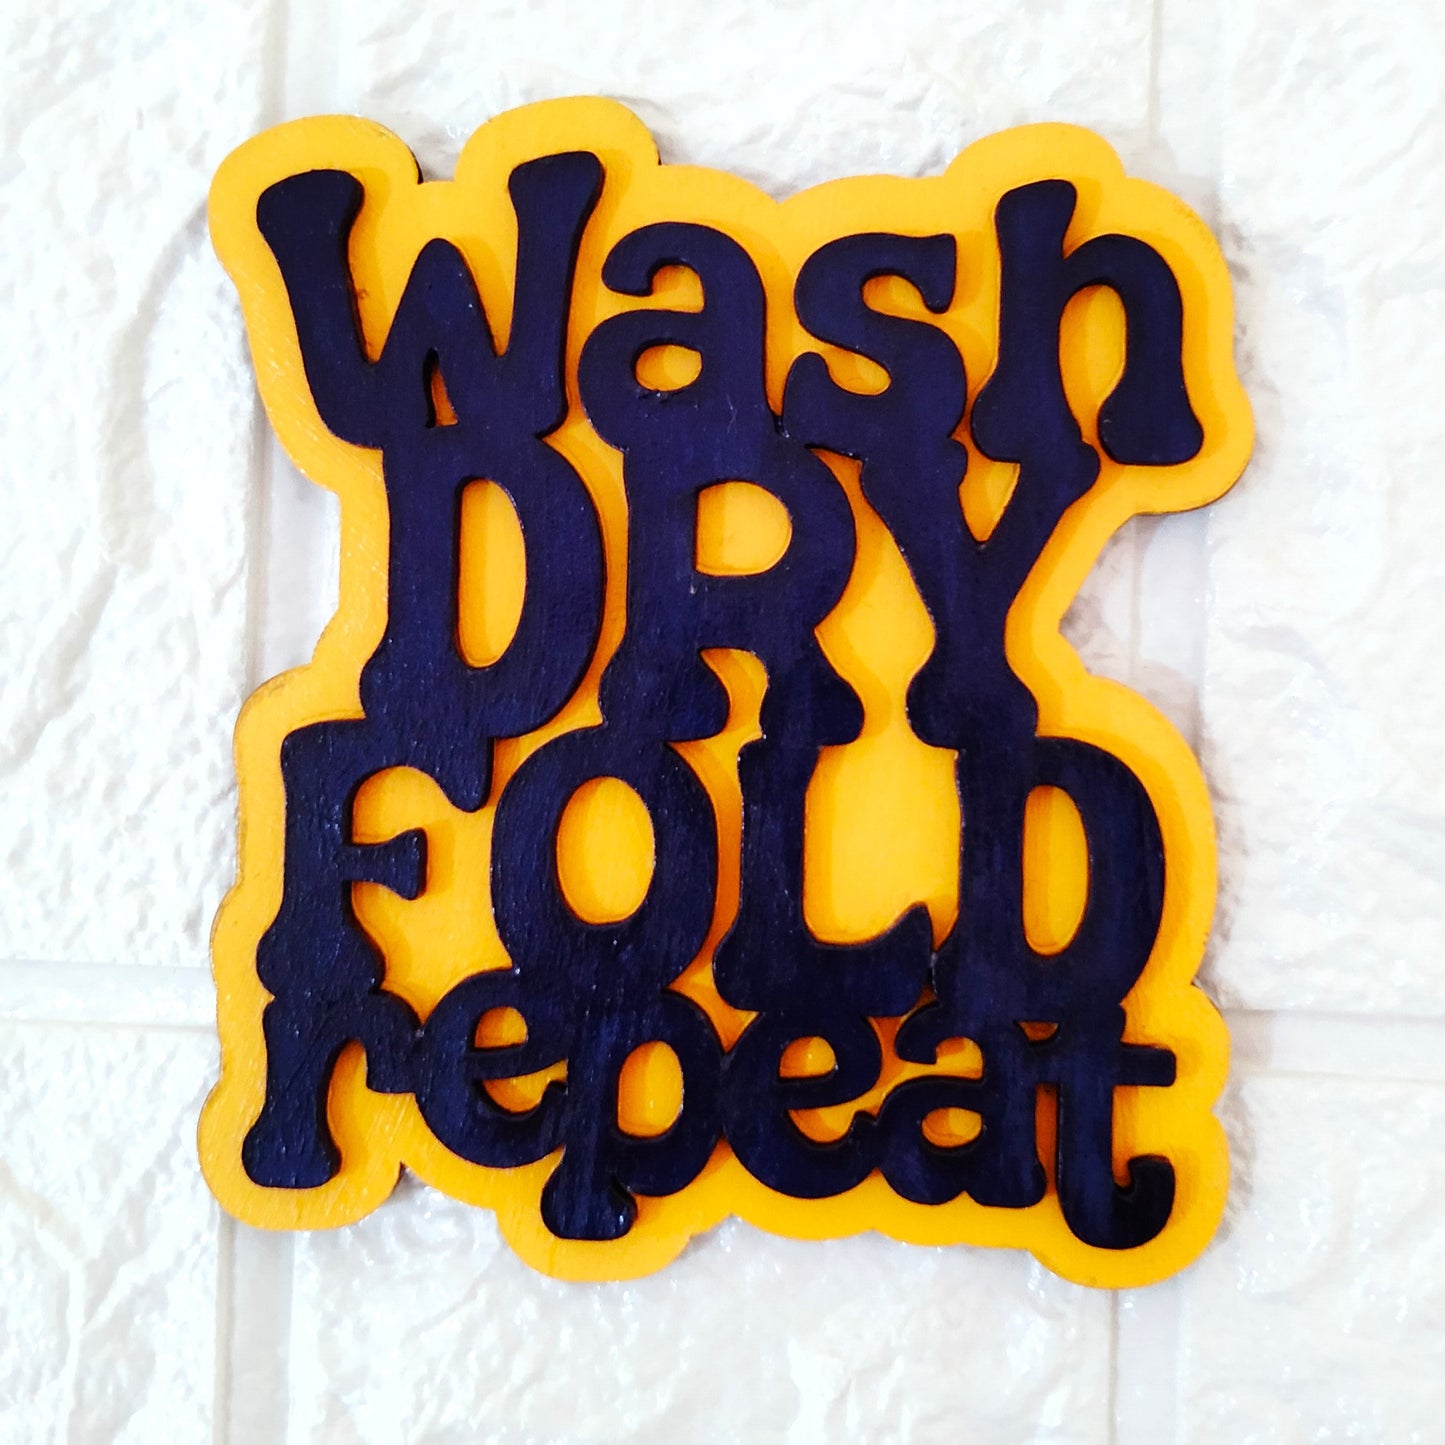 
                  
                    Wash Dry Fold Repeat Fridge Magnet
                  
                